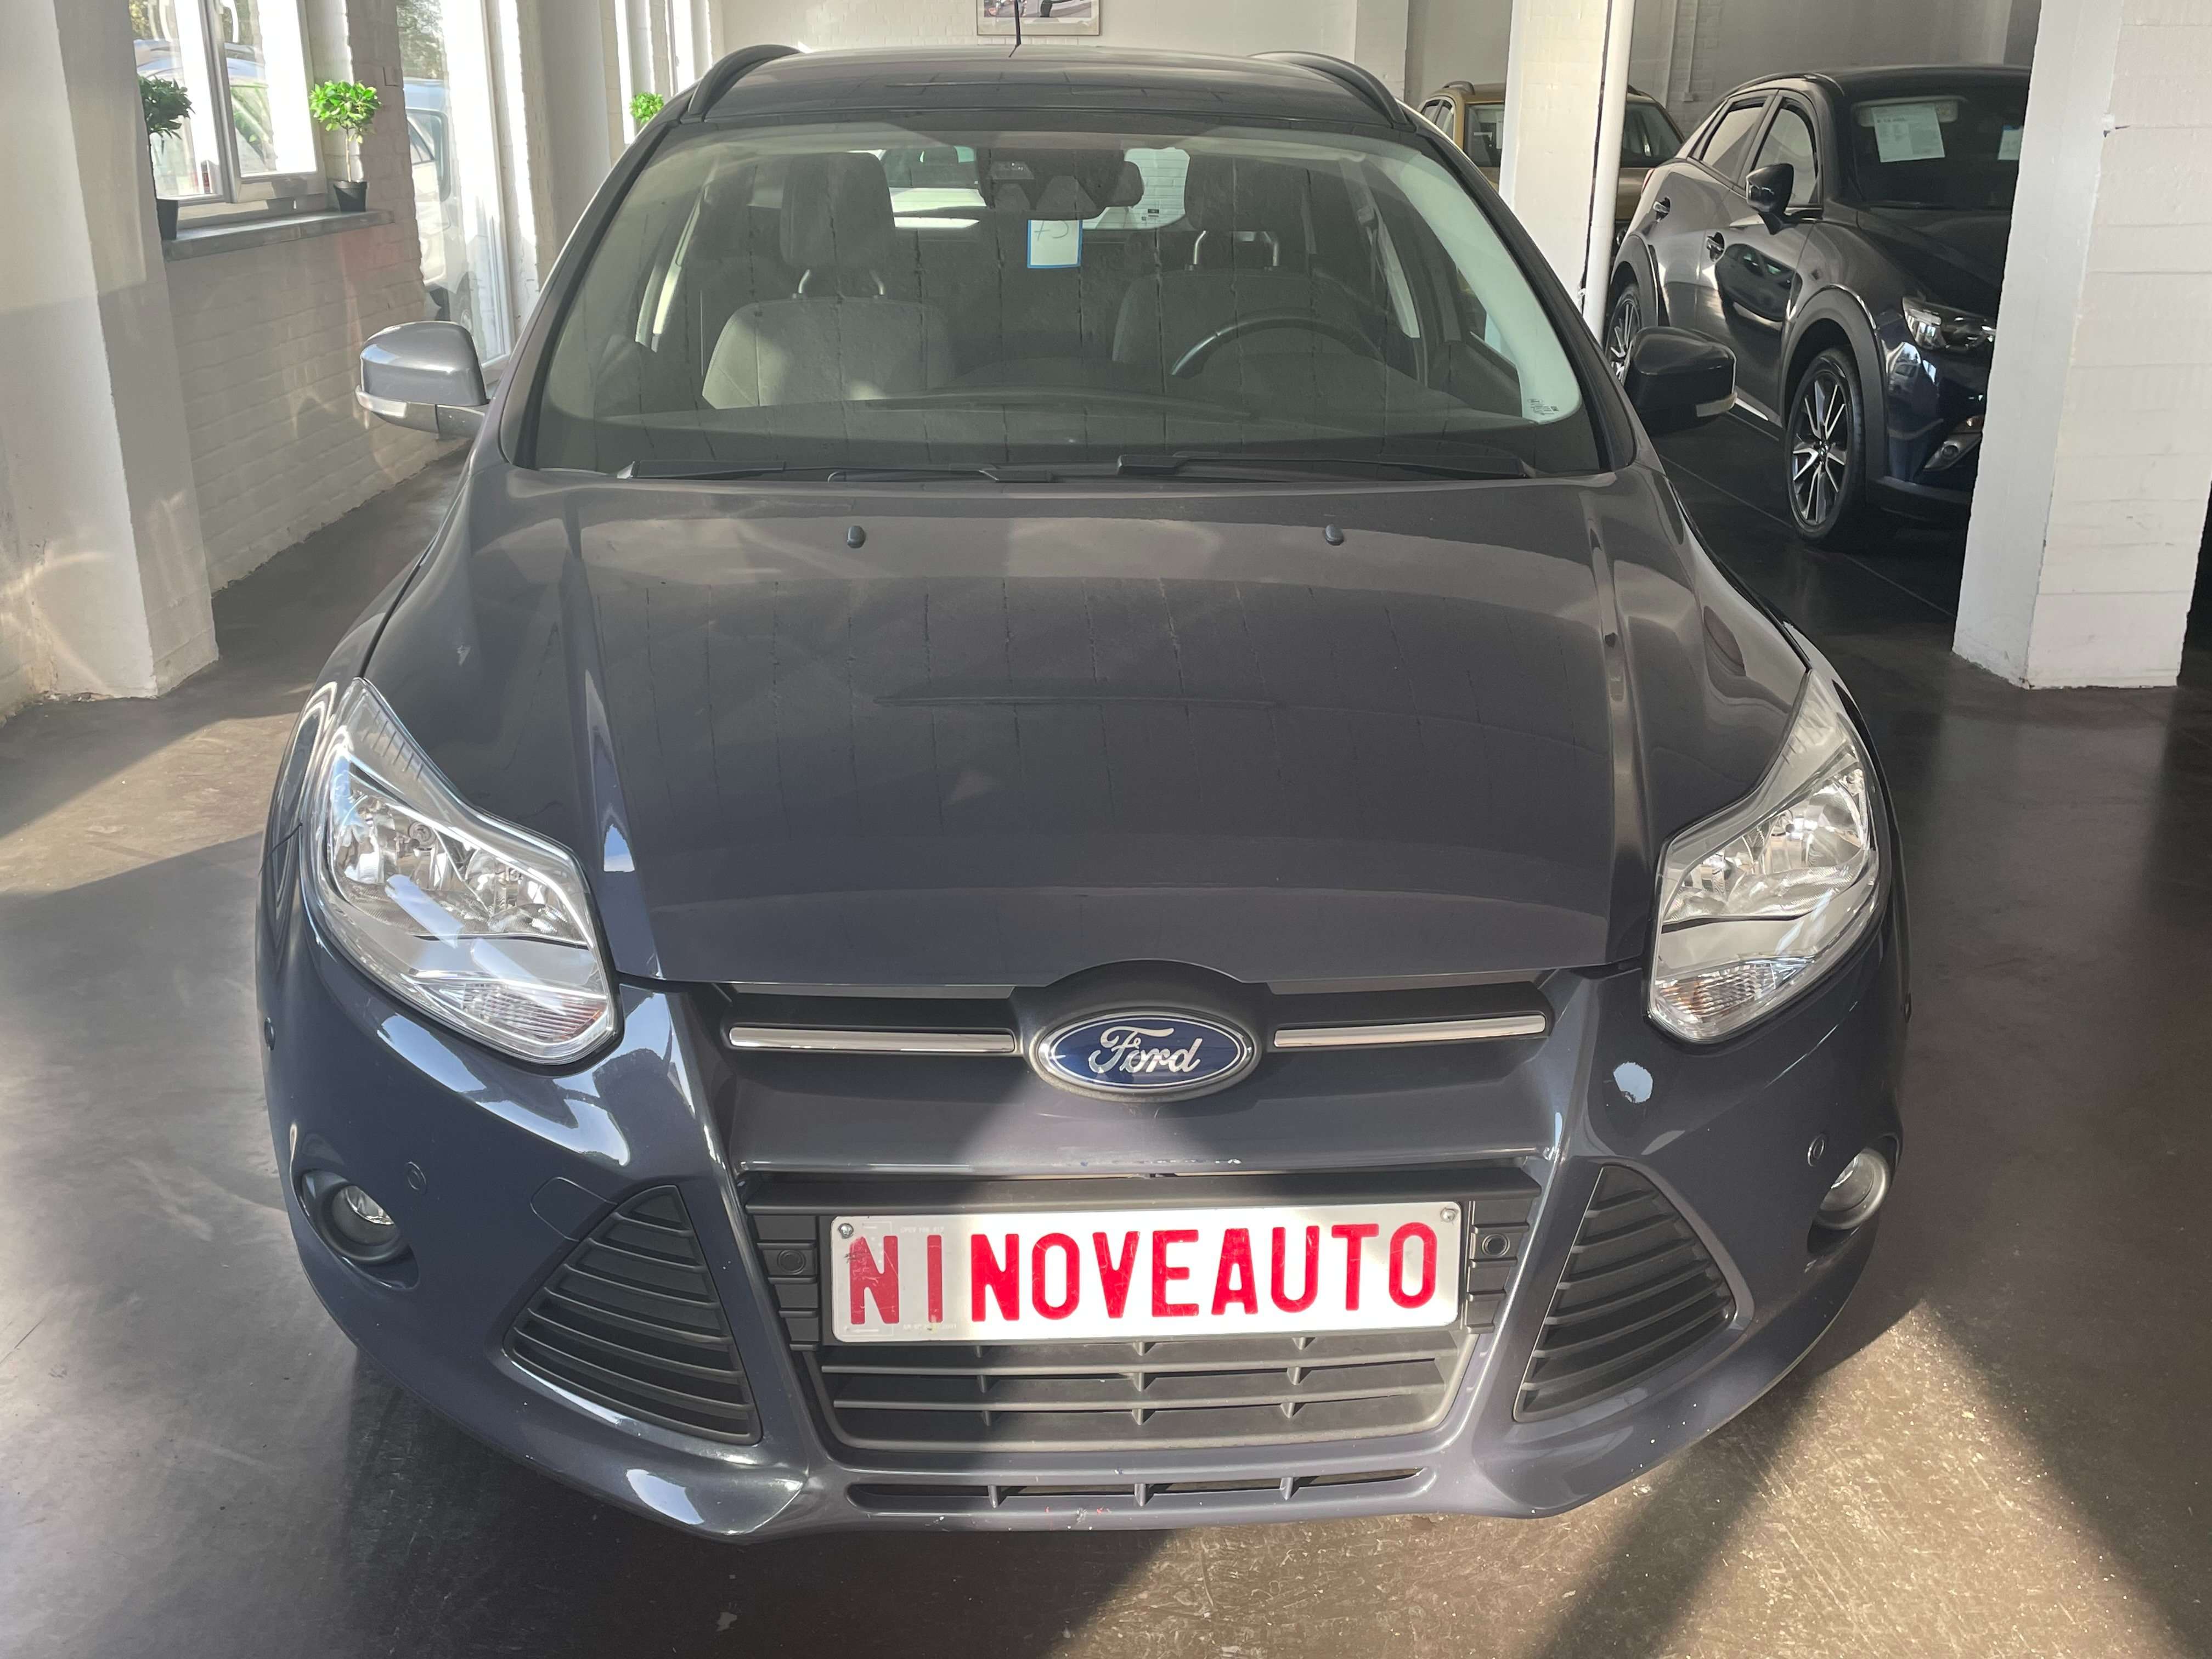 Ninove auto - Ford Focus